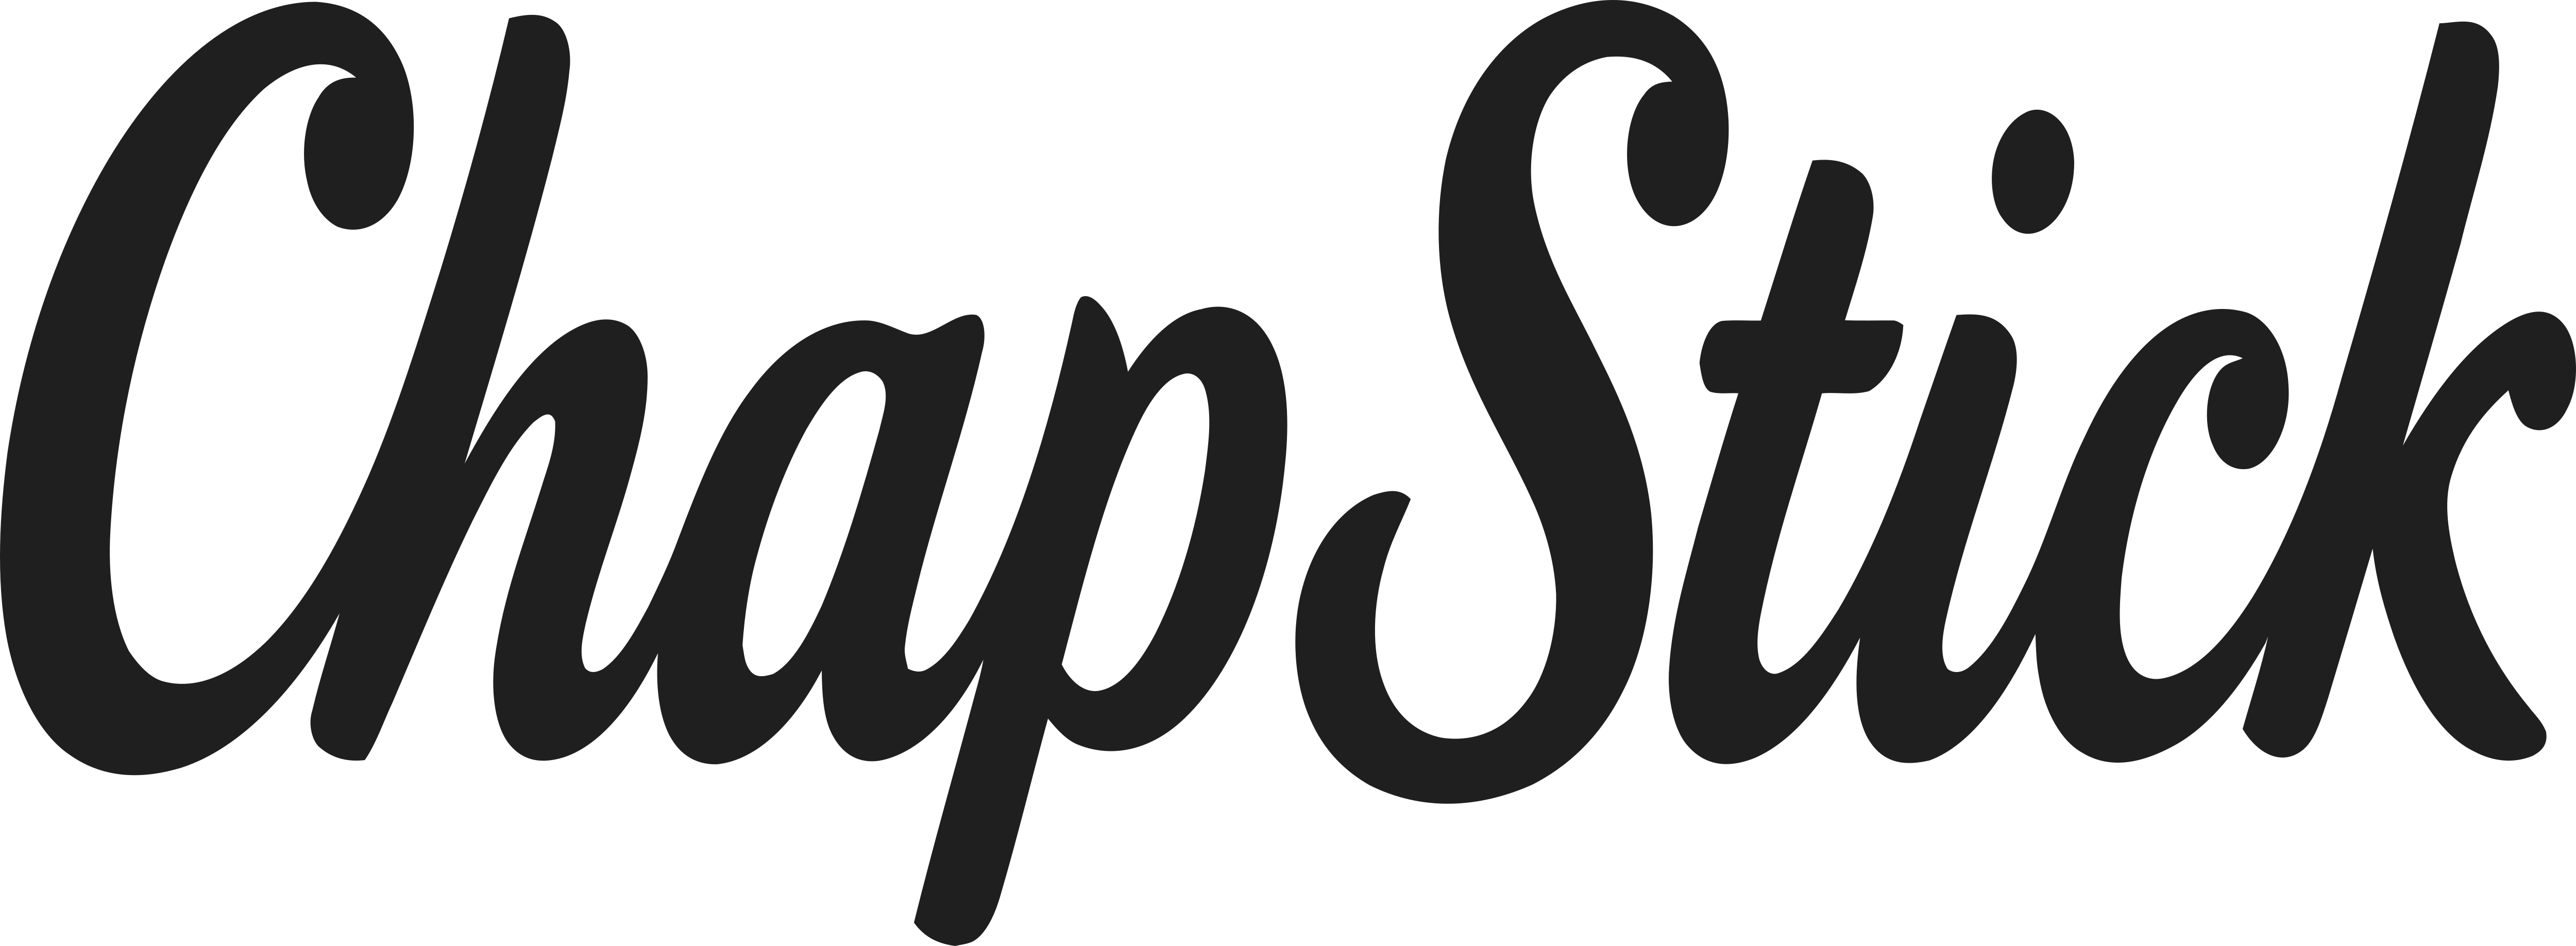 Chapstick Logo - Chapstick